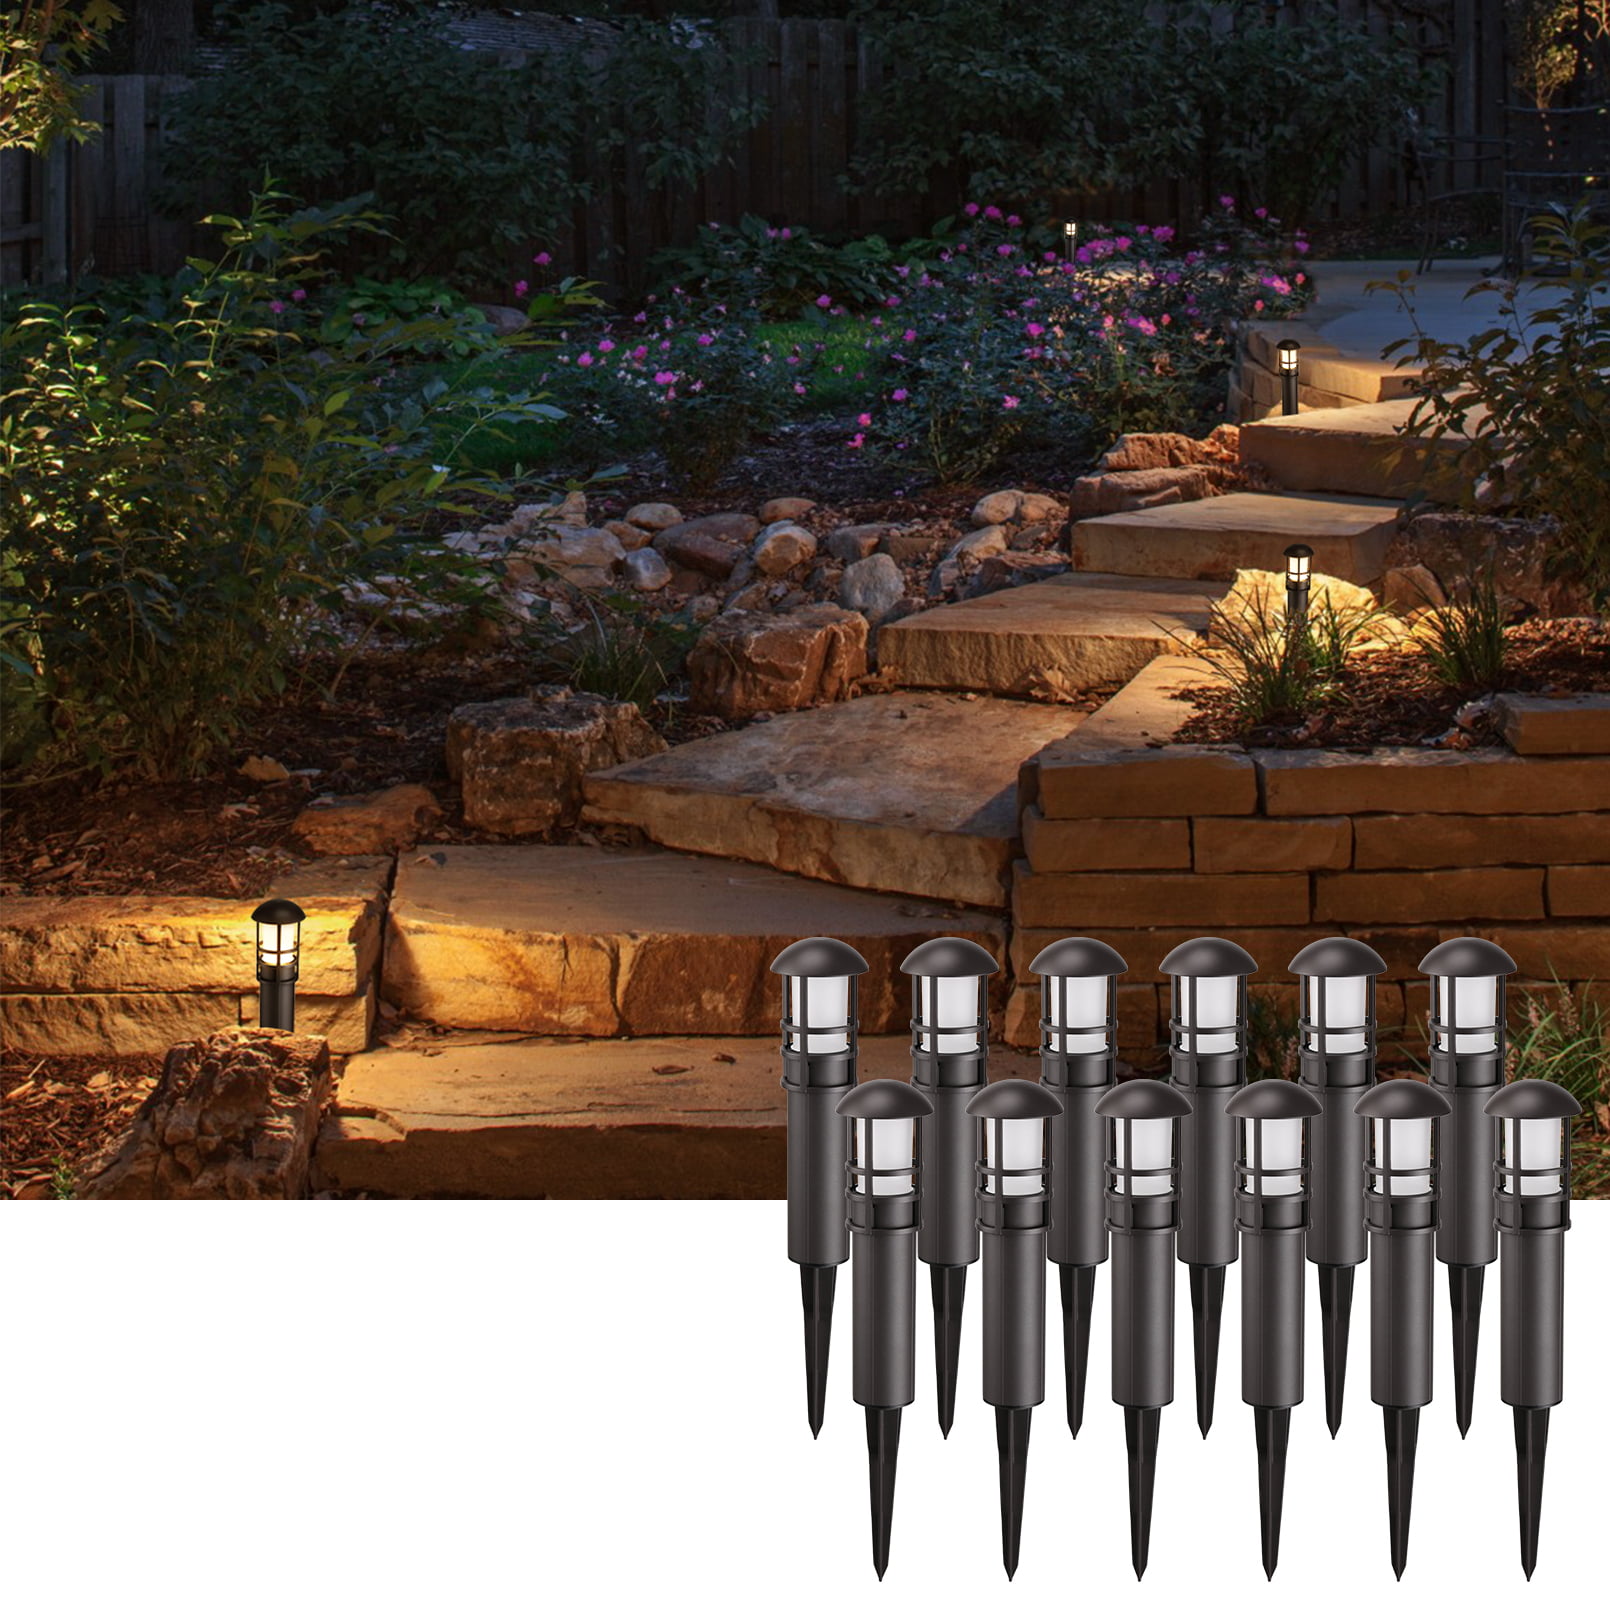 Details about   LED Light Outdoor Landscape Spotlights Lights Garden Wall Yard Path Lawn Lamp US 